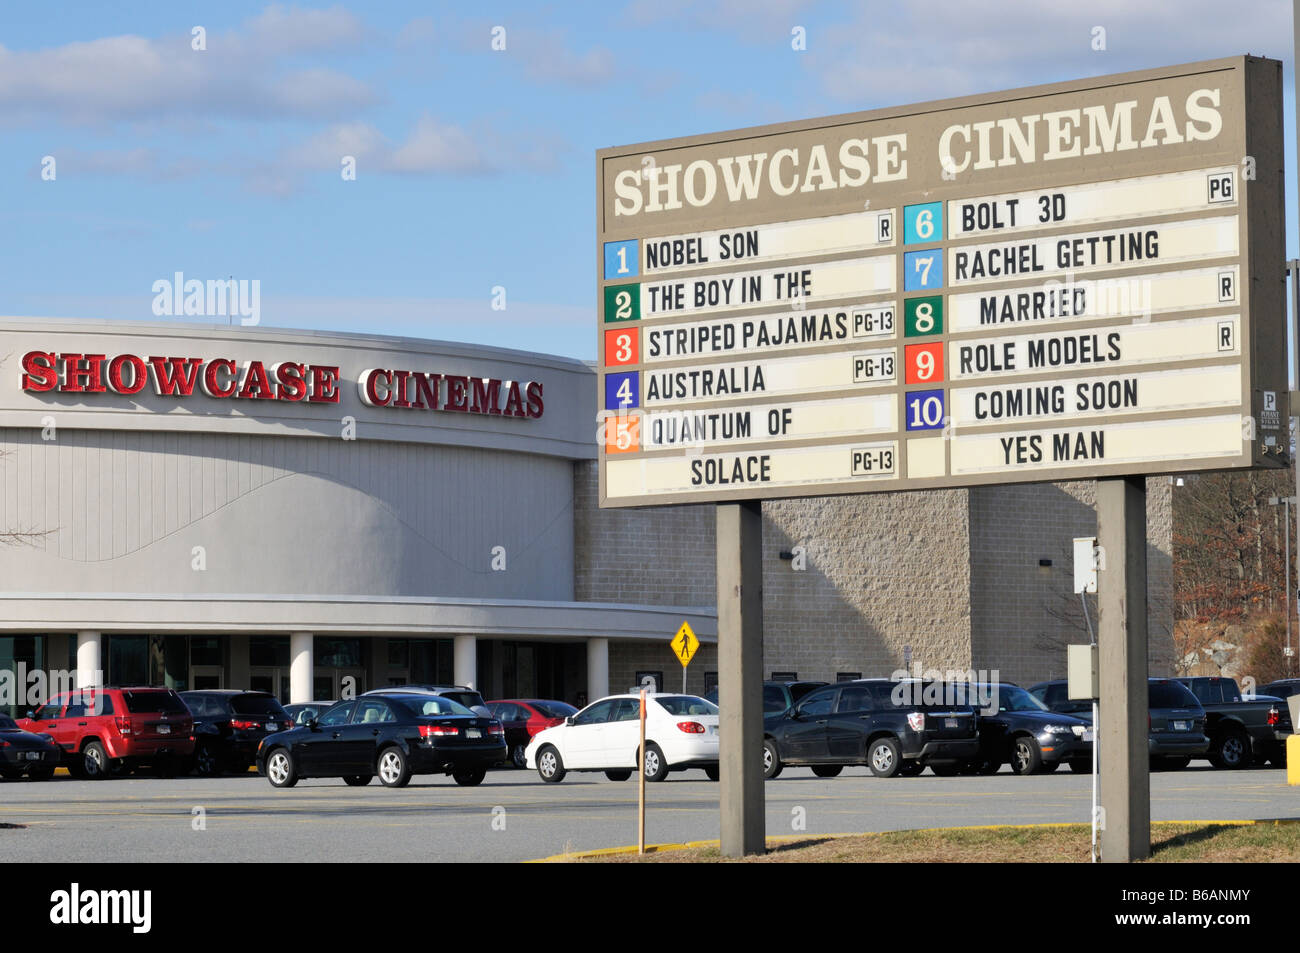 Showcase cinemas owned by National Amusements Sumner Redstone USA Stock Photo